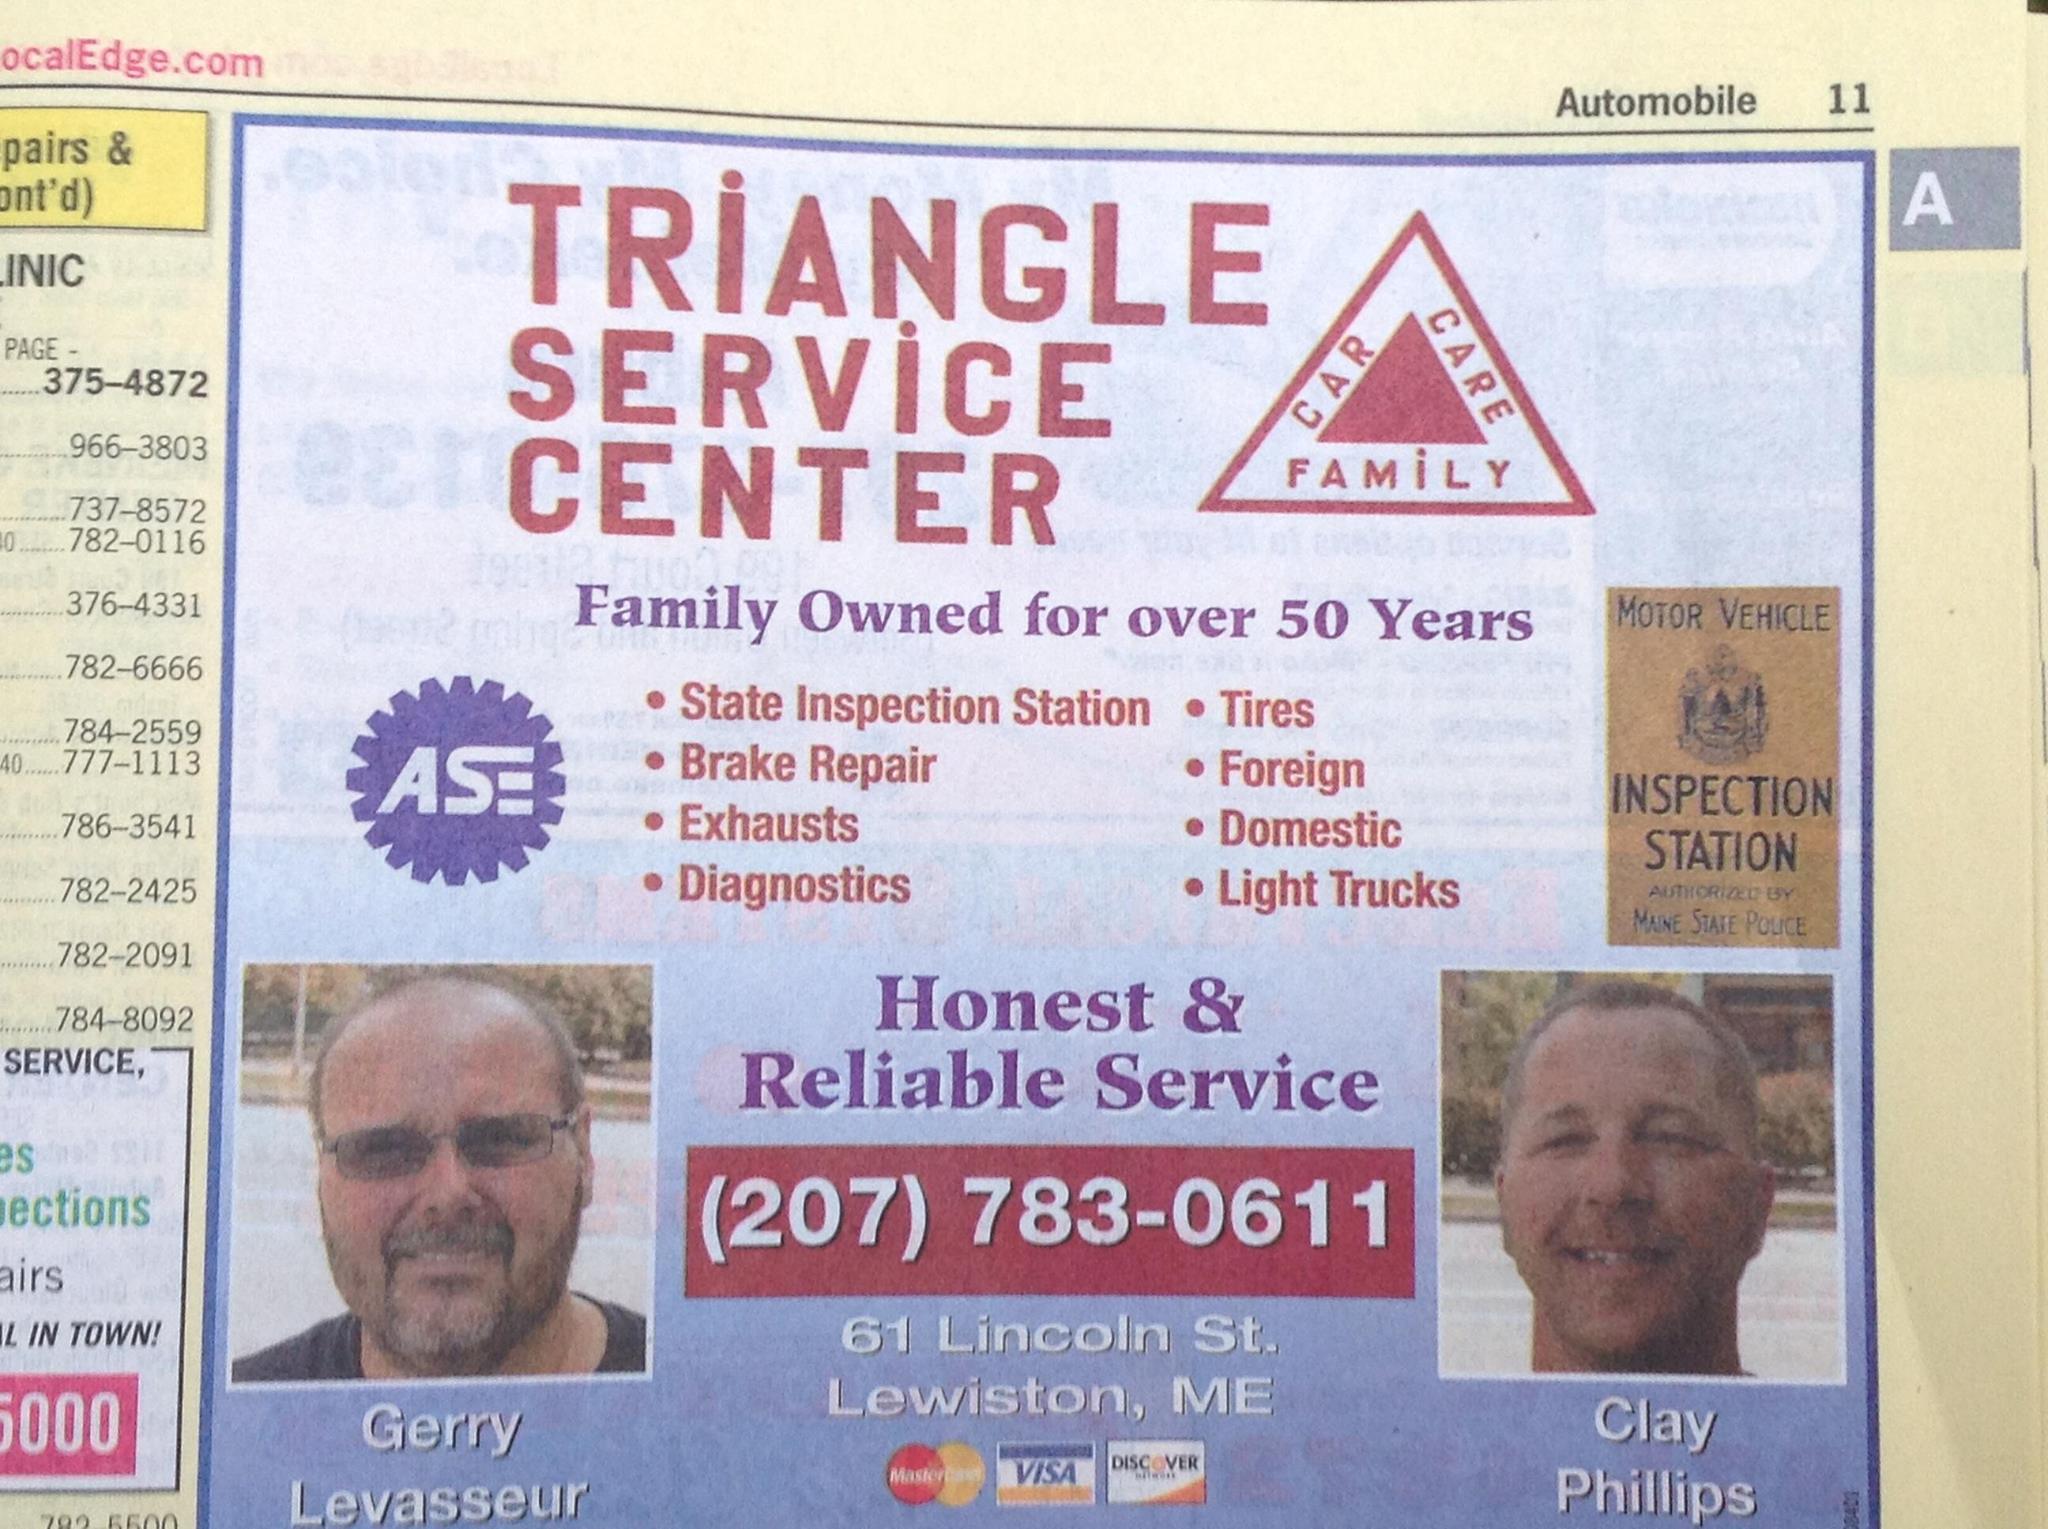 Triangle Service Center Inc